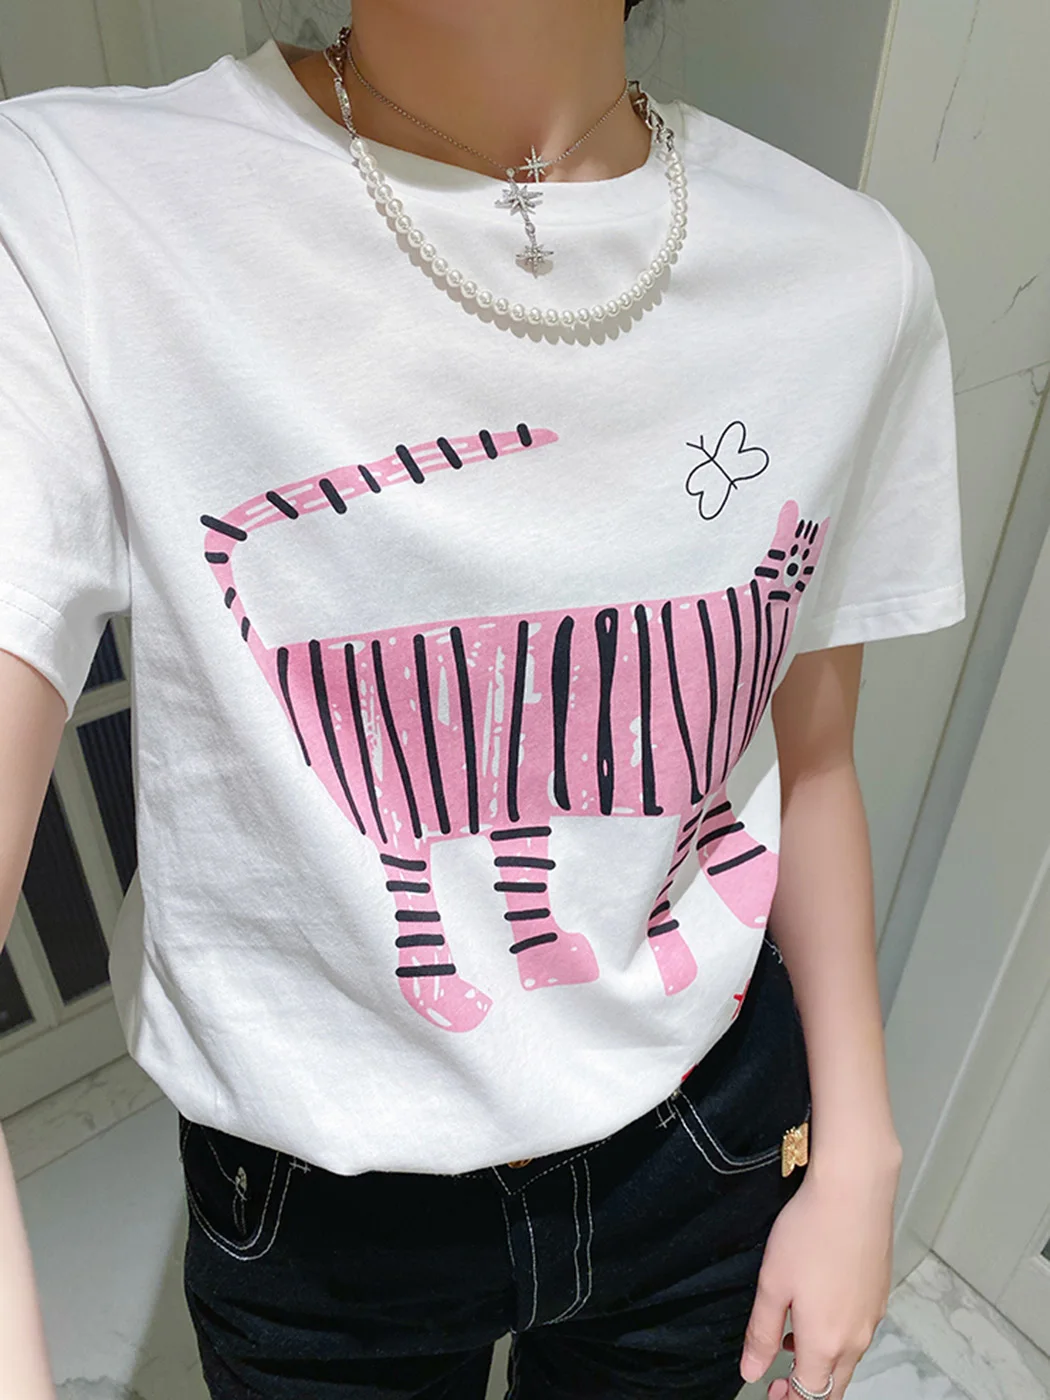 Tiger Cartoon Graphic T-Shirts Woman Summer Cotton Cozy Chic Tshirts Tops Femme Casual Vinatge Fashion Tee Shirts Clothes 2022